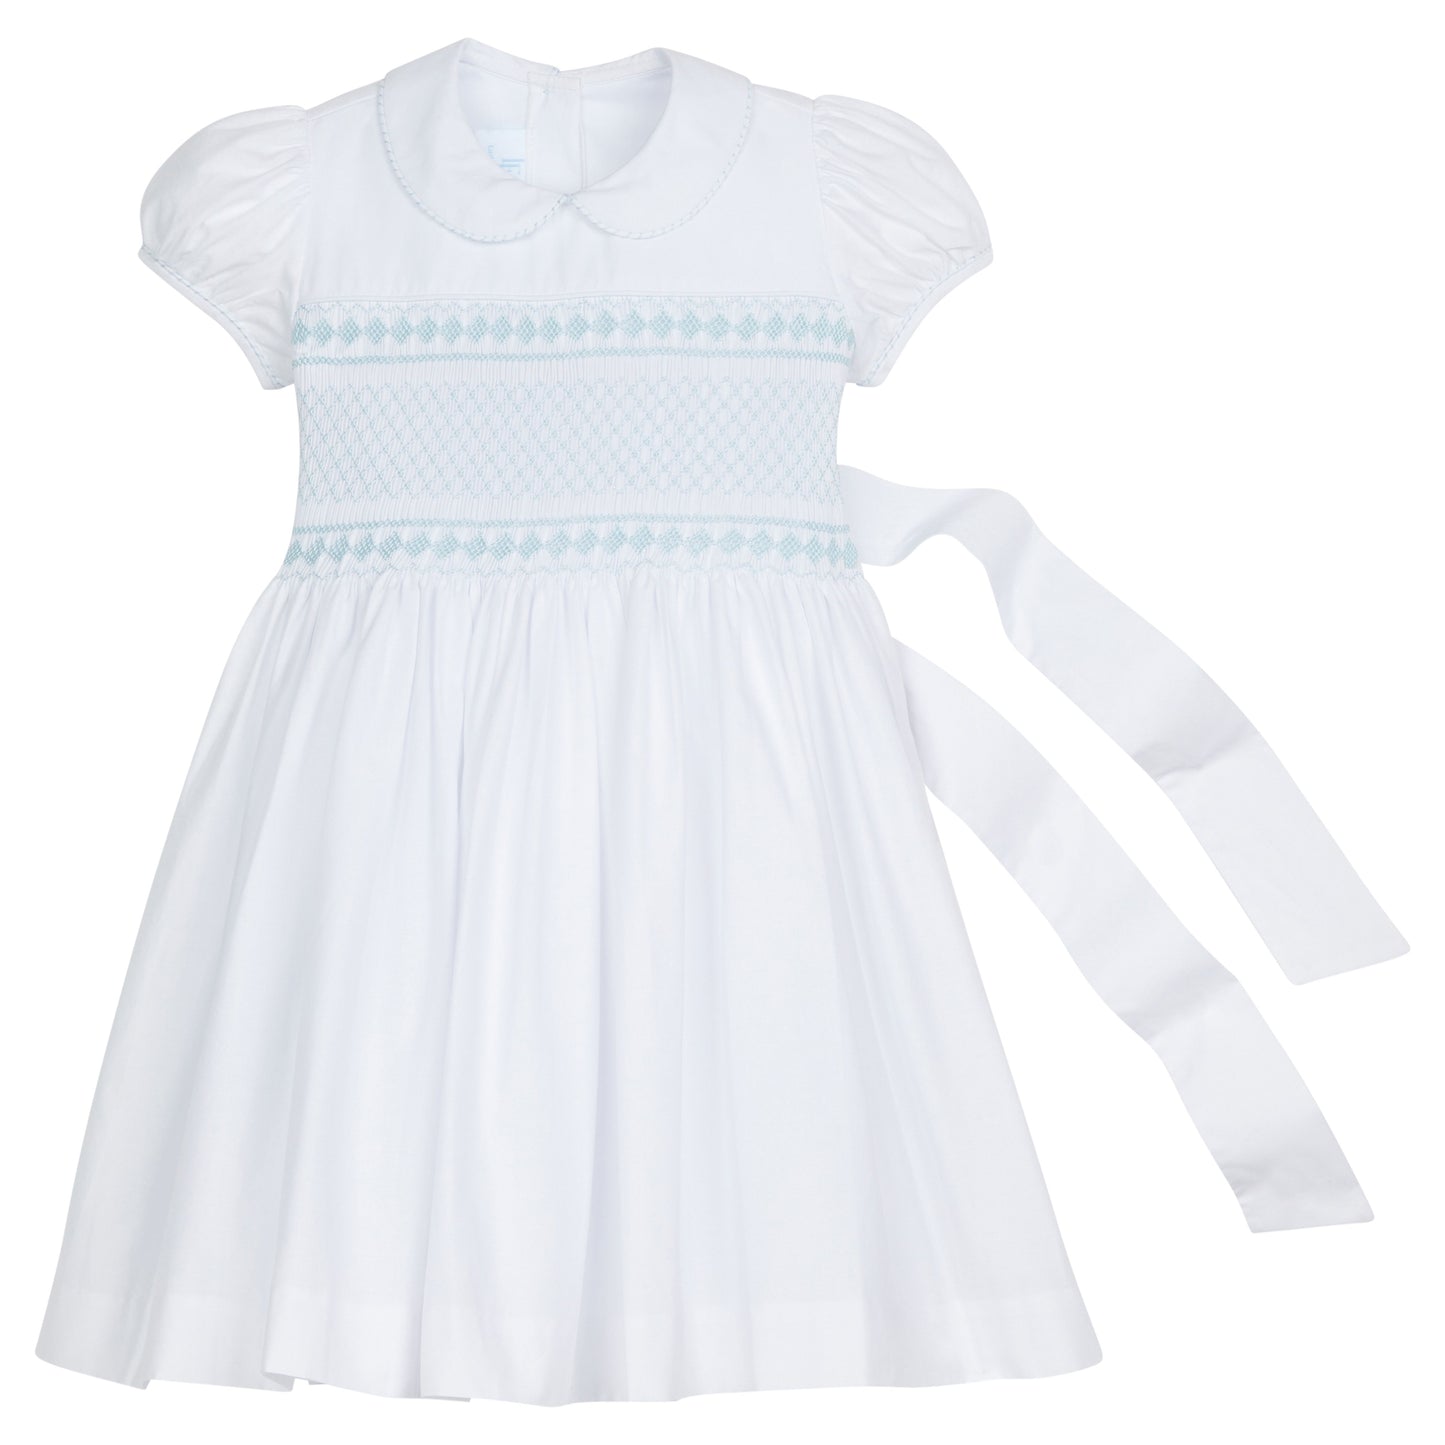 Little English Smocked Emery Dress - White with Light Blue